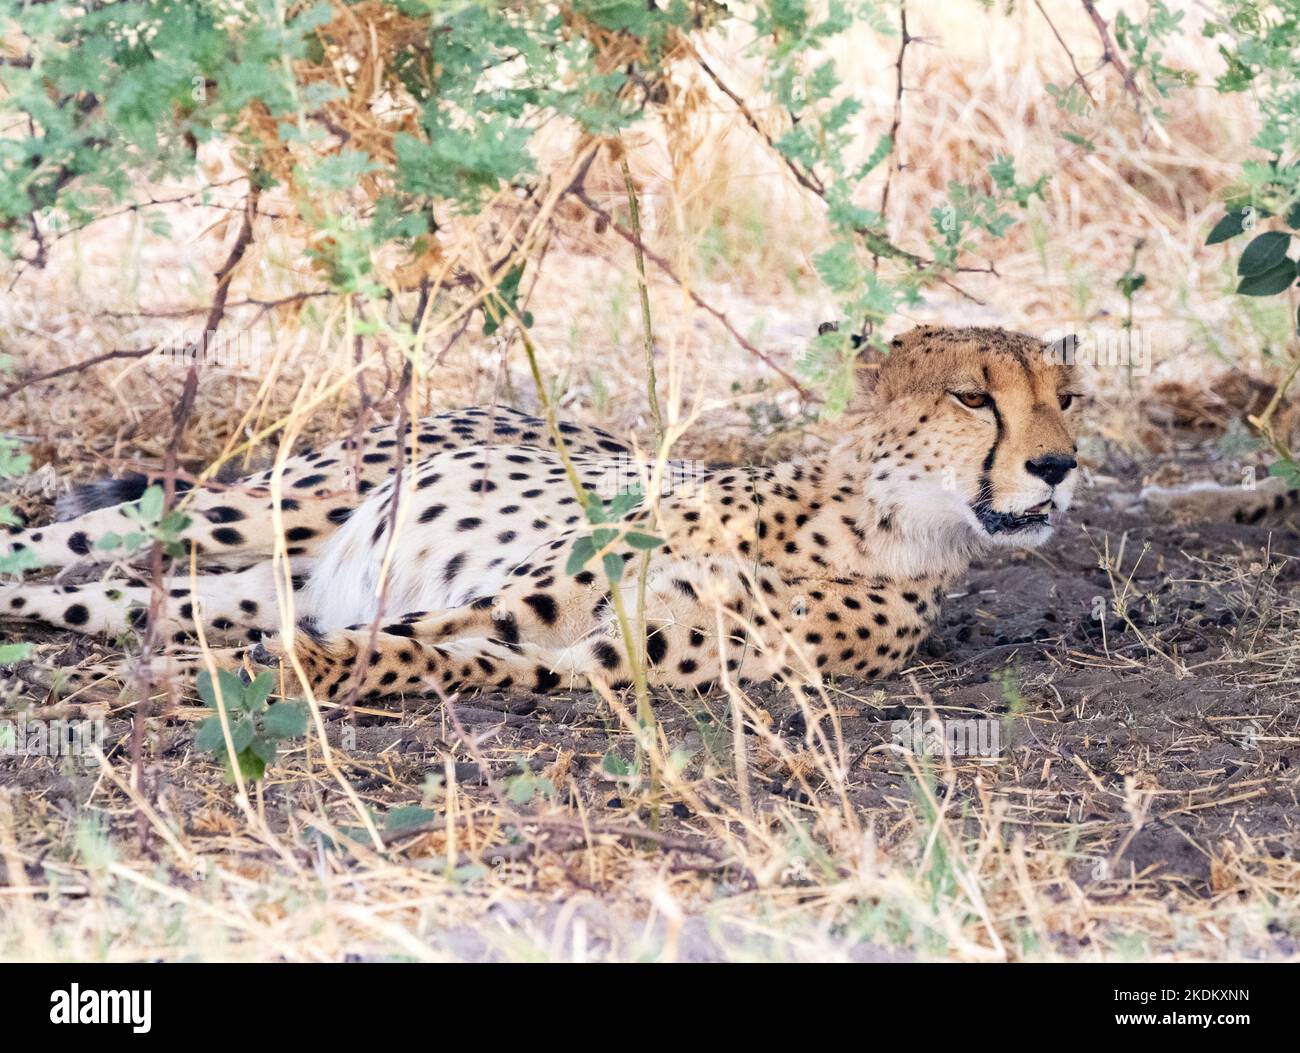 Erwachsene männliche Gepard, Acinonyx jubatus in freier Wildbahn, Chobe National Park, Botswana Africa. Gefährdete Arten. Große Kat. Stockfoto